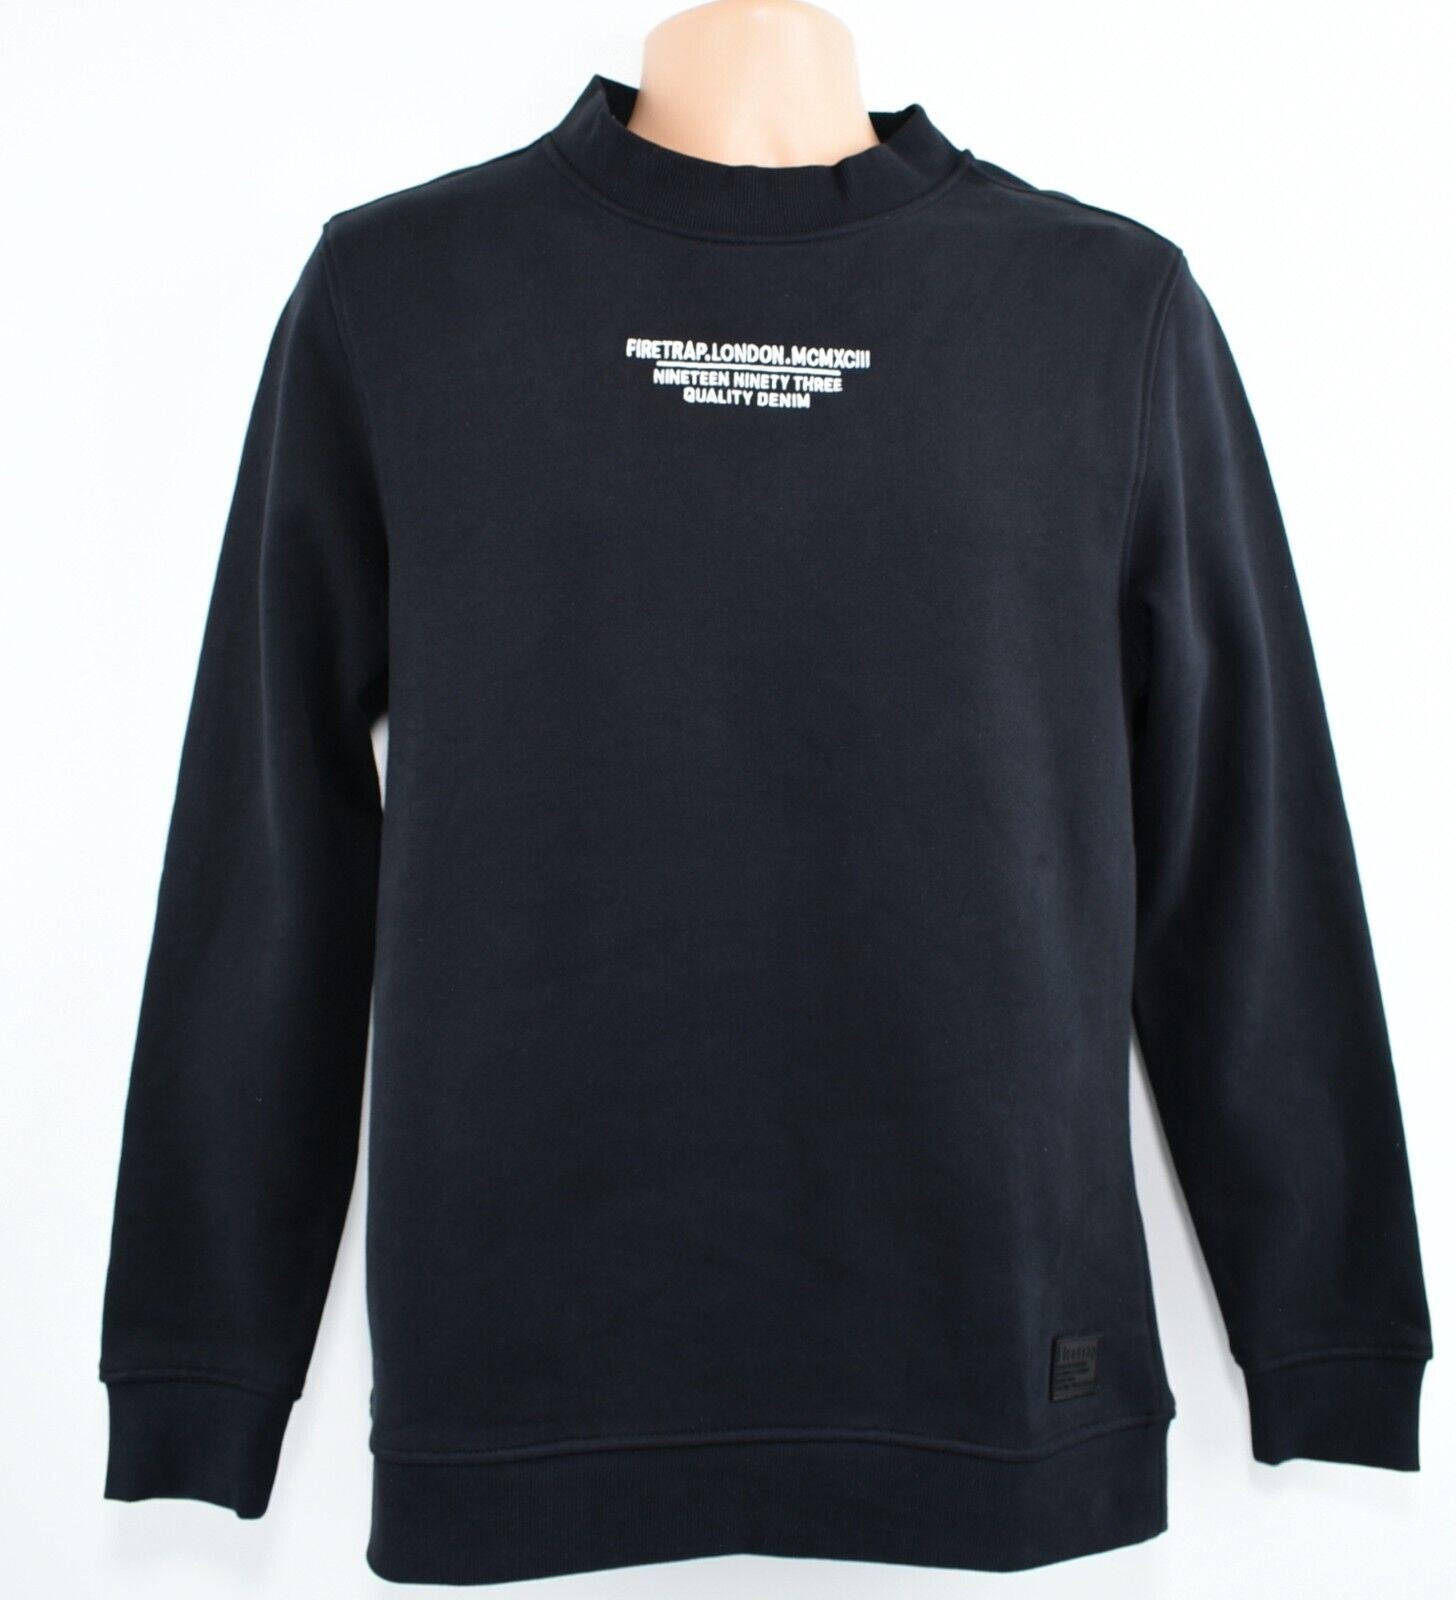 FIRETRAP Men's Crew Sweatshirt, Black, size LARGE